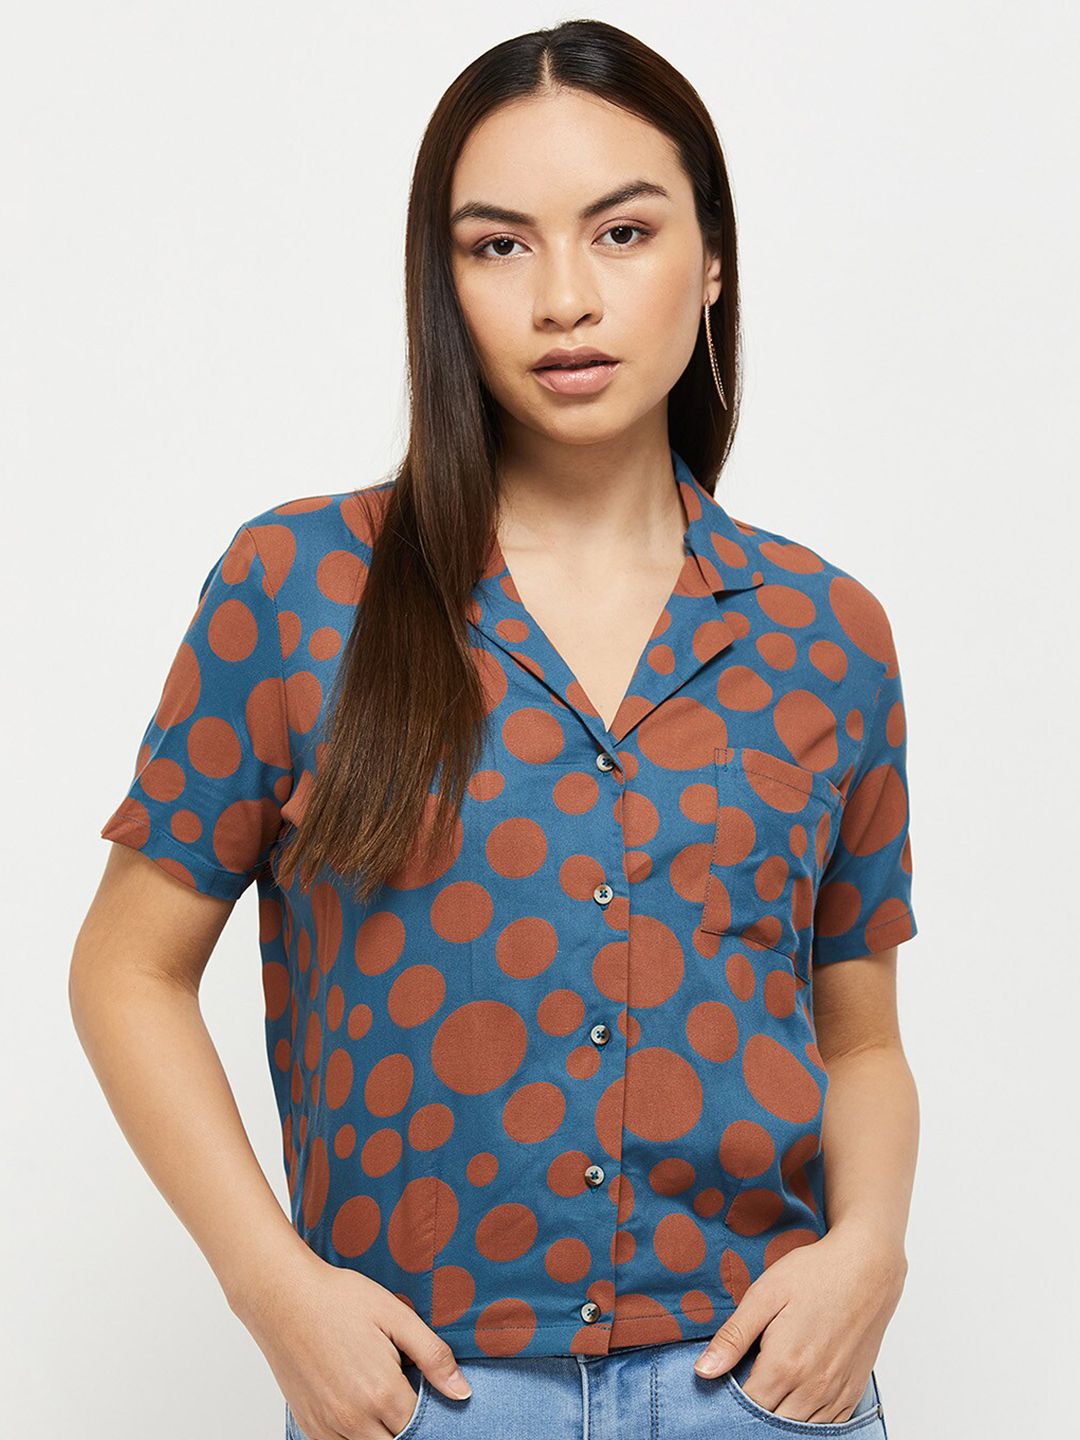 max Women Teal Geometric Print Shirt Style Top Price in India